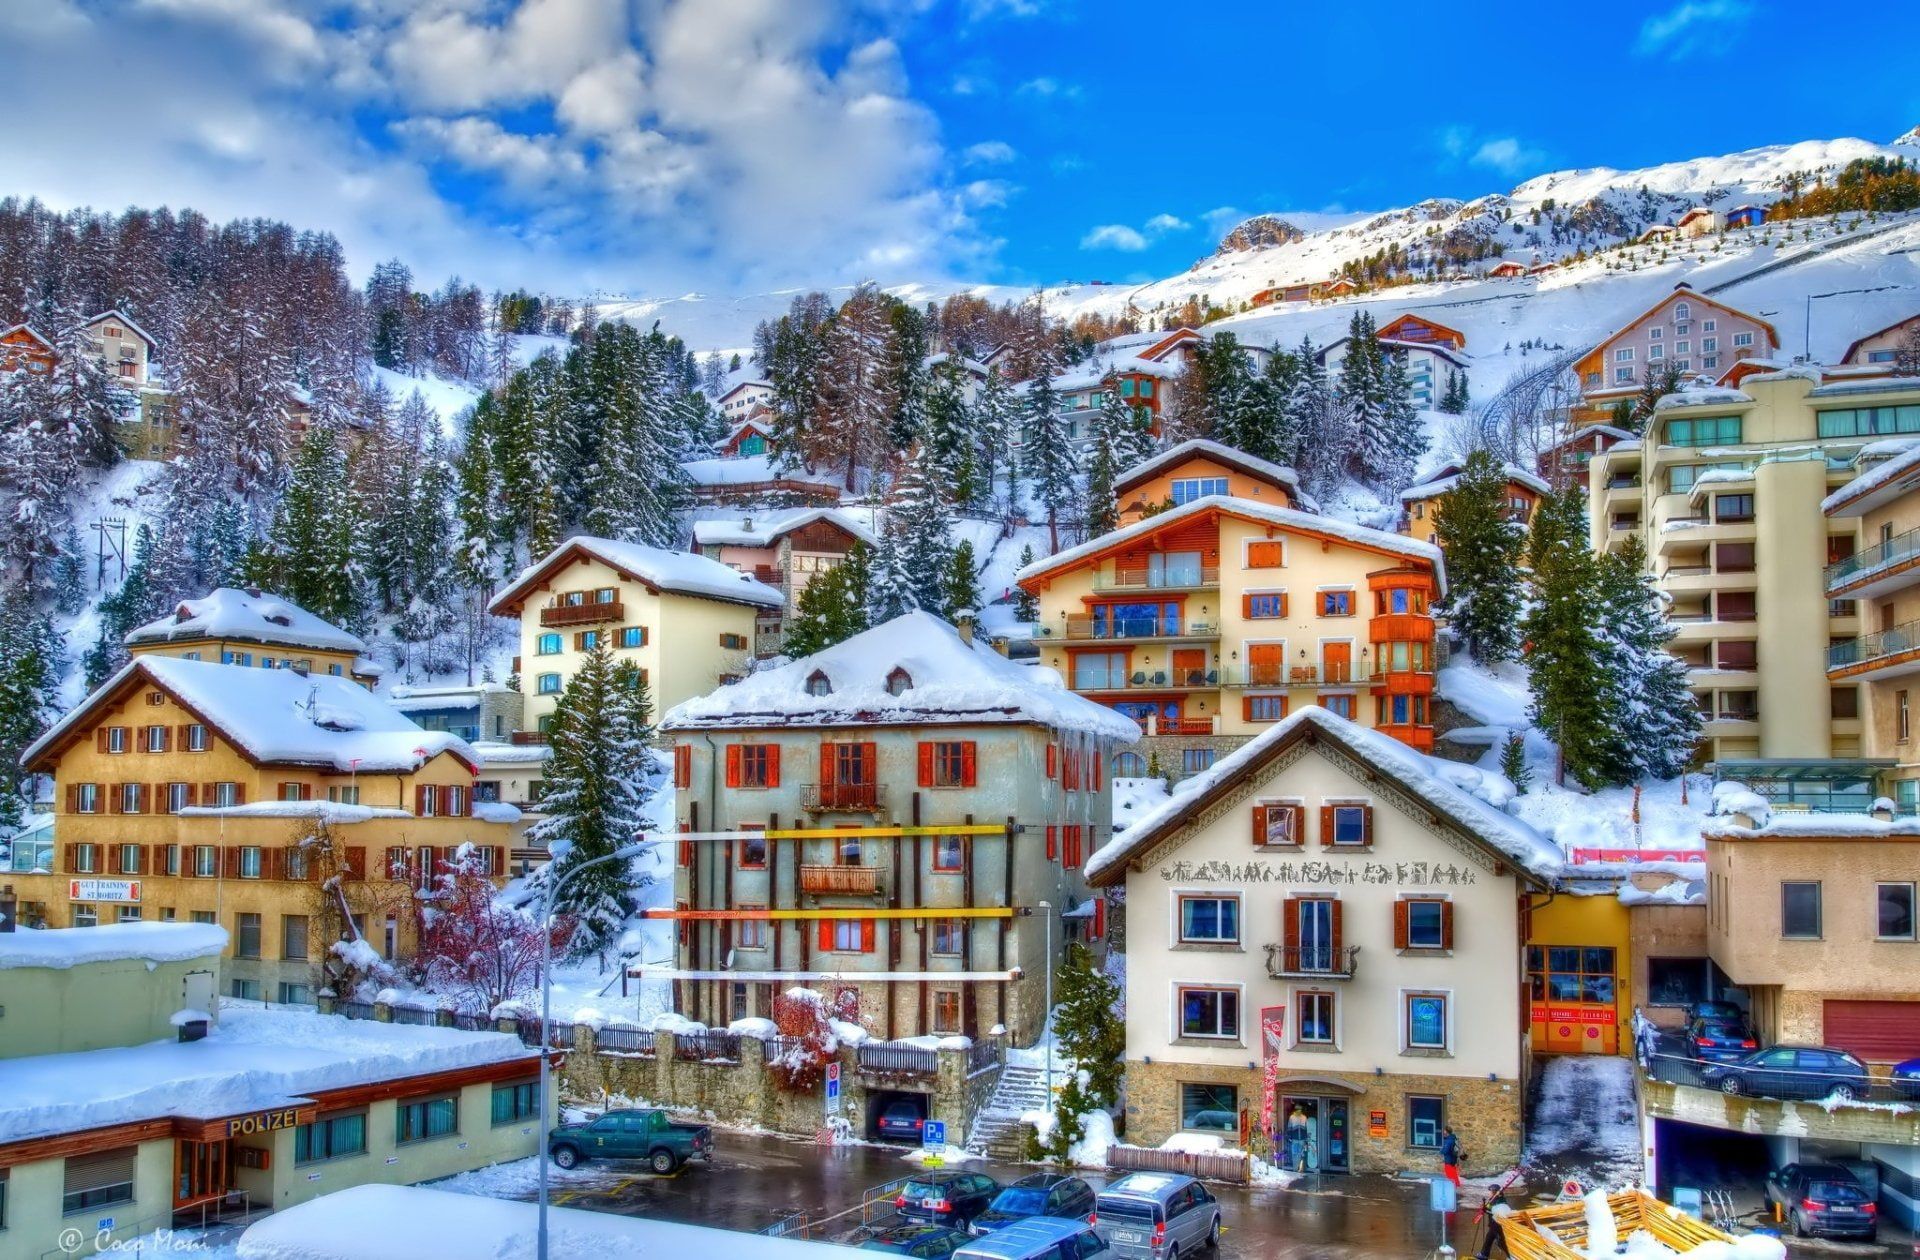 Towns St. Moritz #Snow #Switzerland #Winter P #wallpaper #hdwallpaper #desktop. Switzerland vacation, Winter resort, Switzerland summer